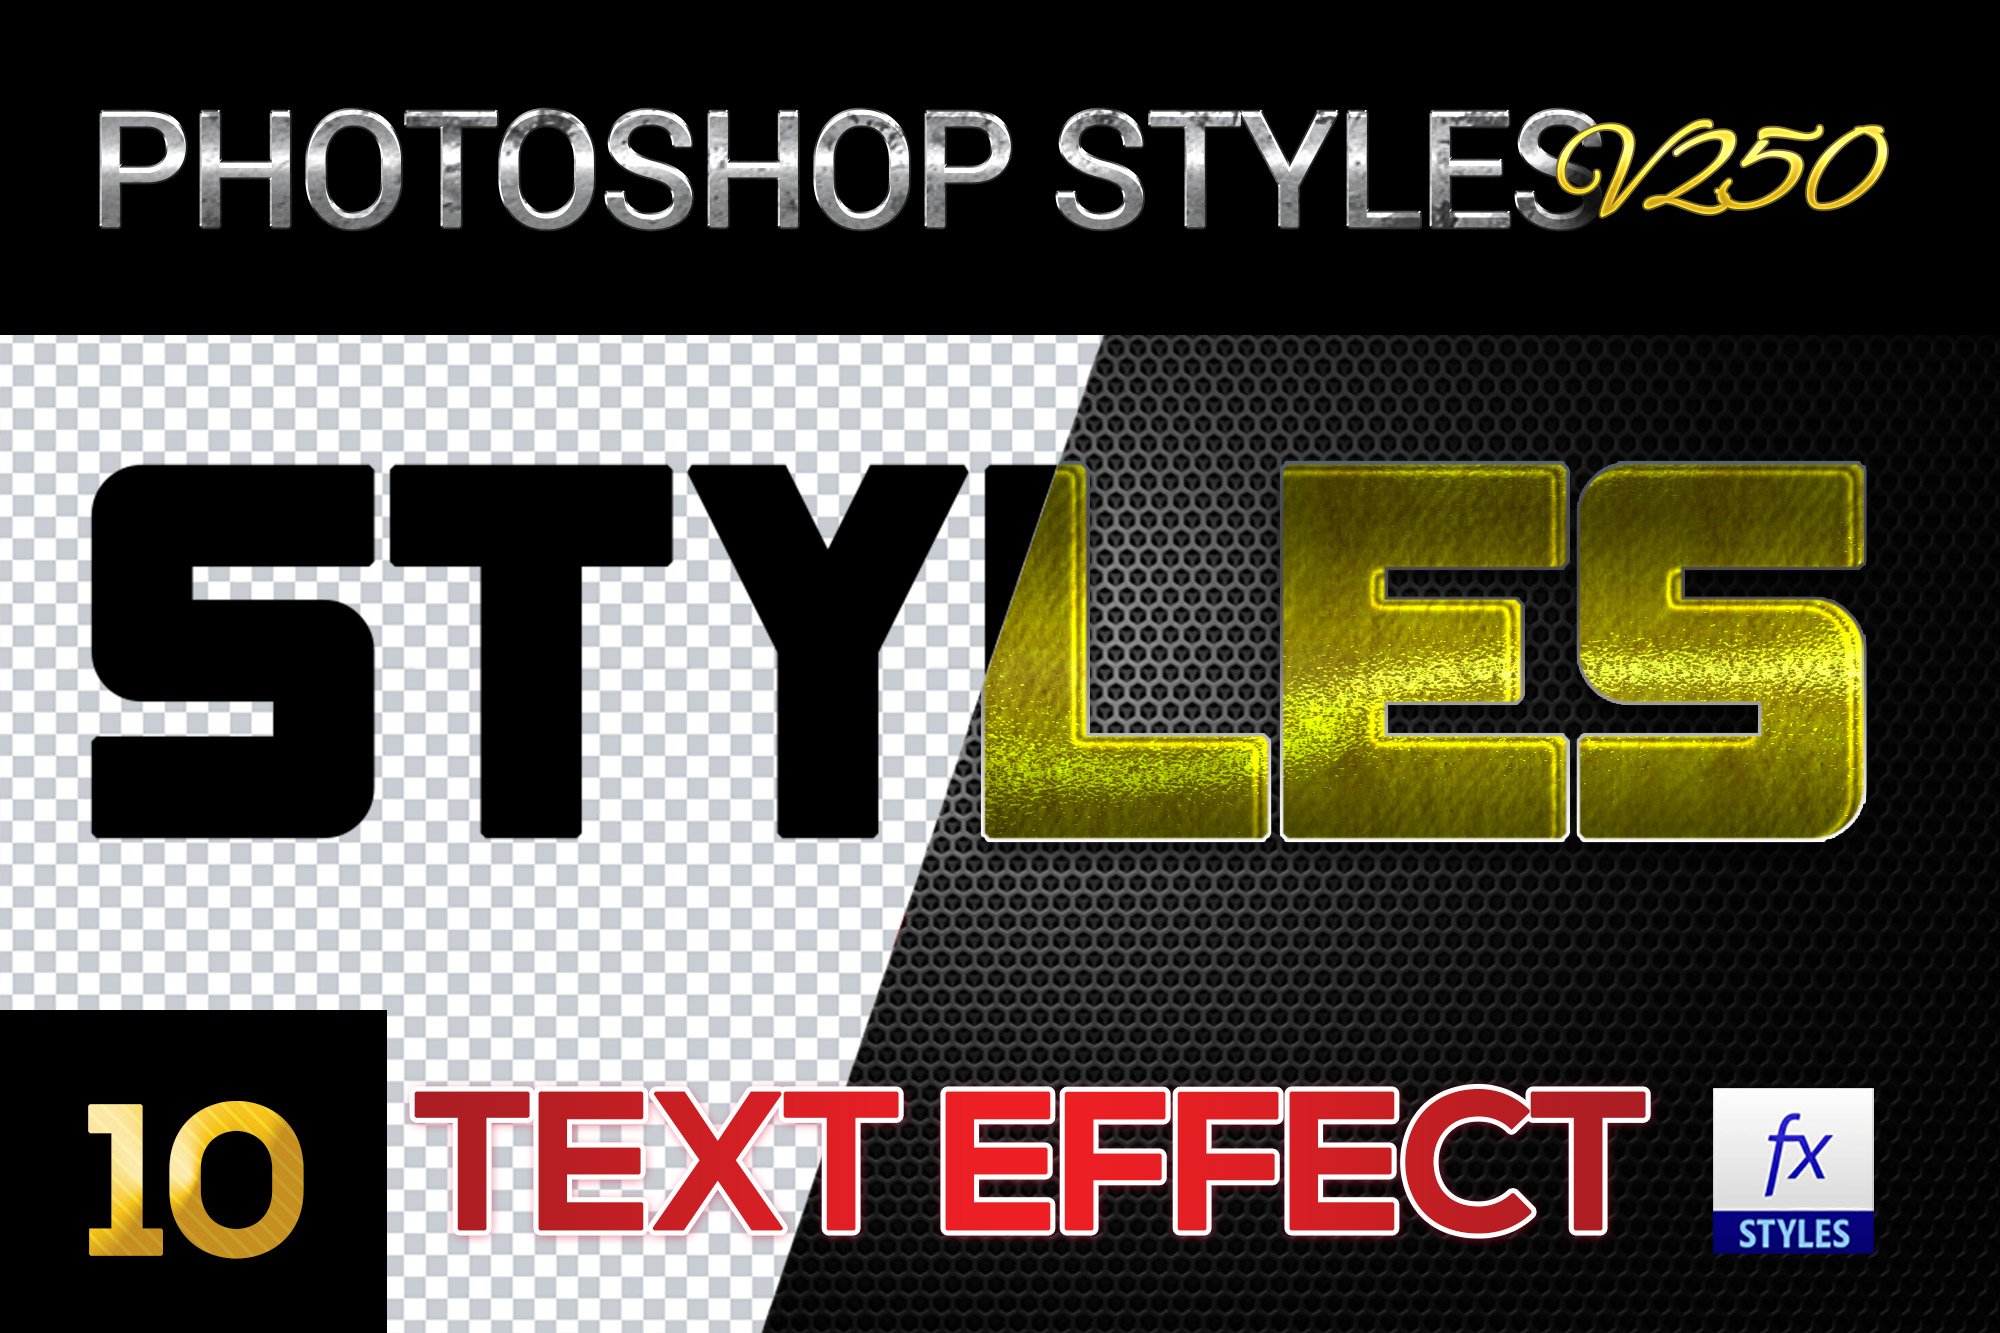 10 creative Photoshop Styles V250cover image.